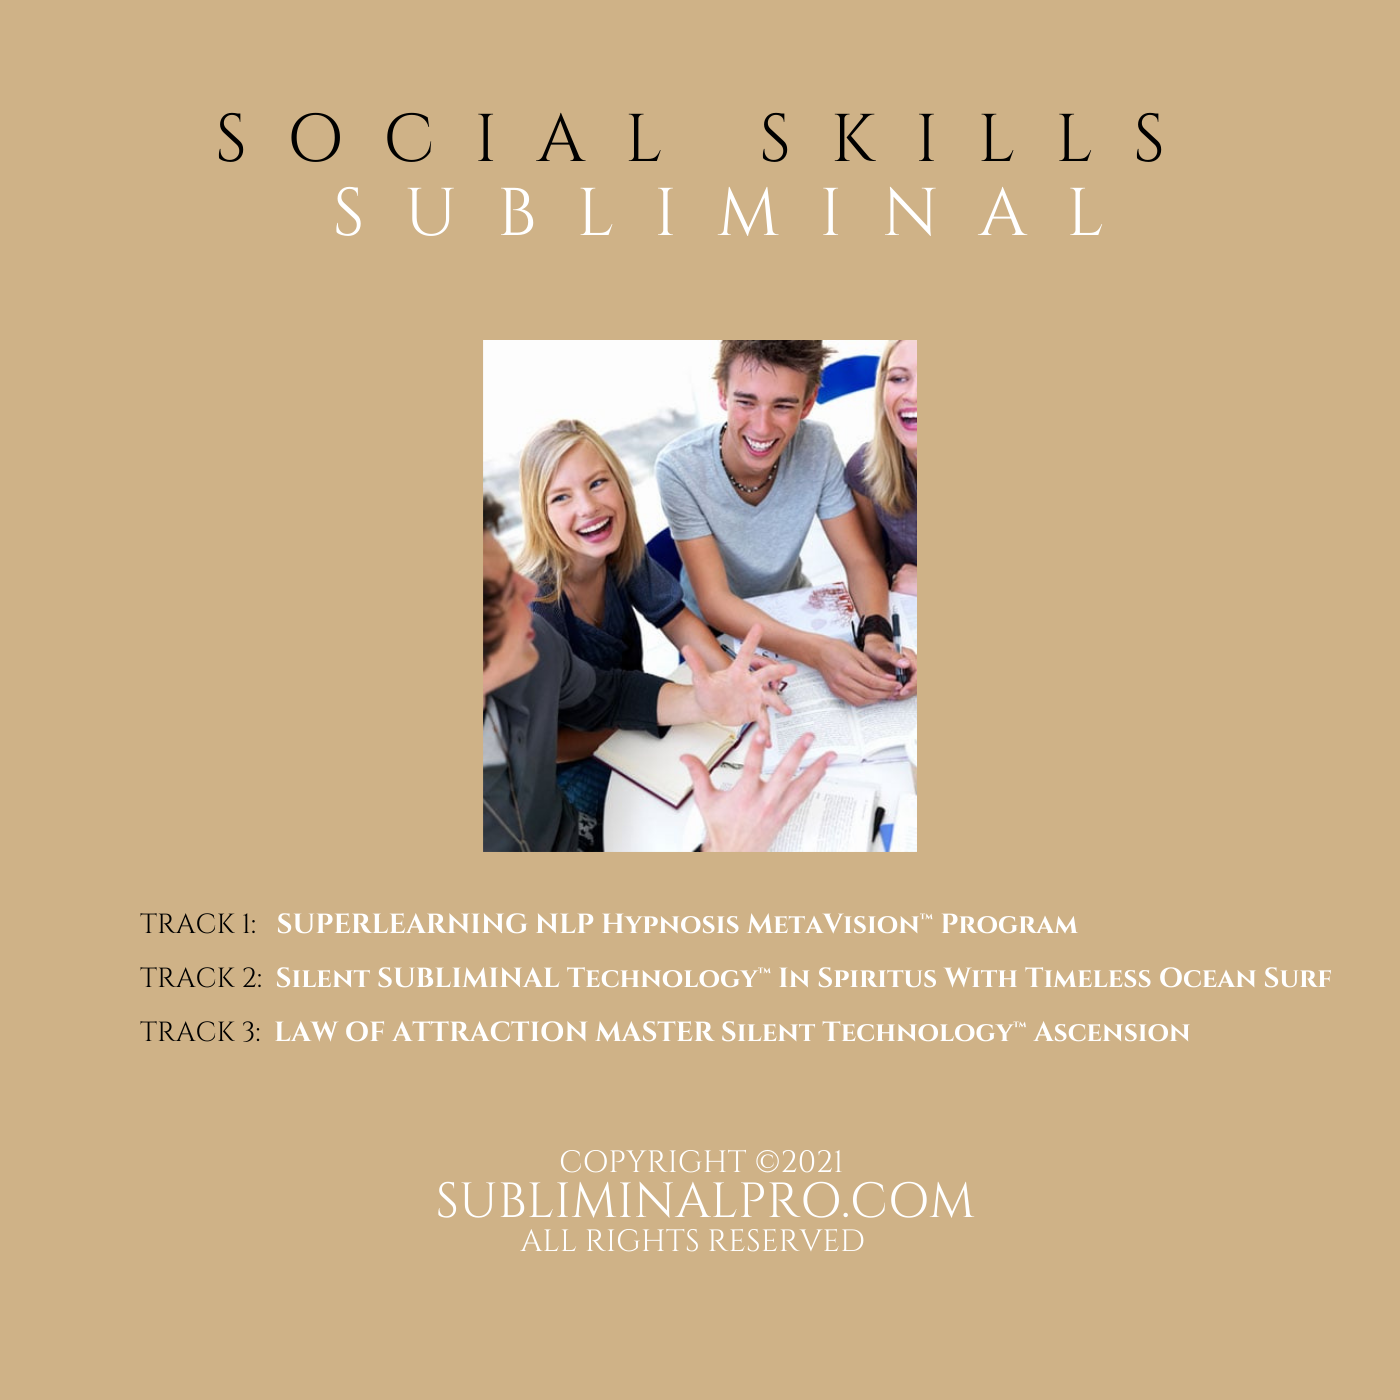 Social Skills Subliminal SUBLIMINAL PRO™ AUDIO